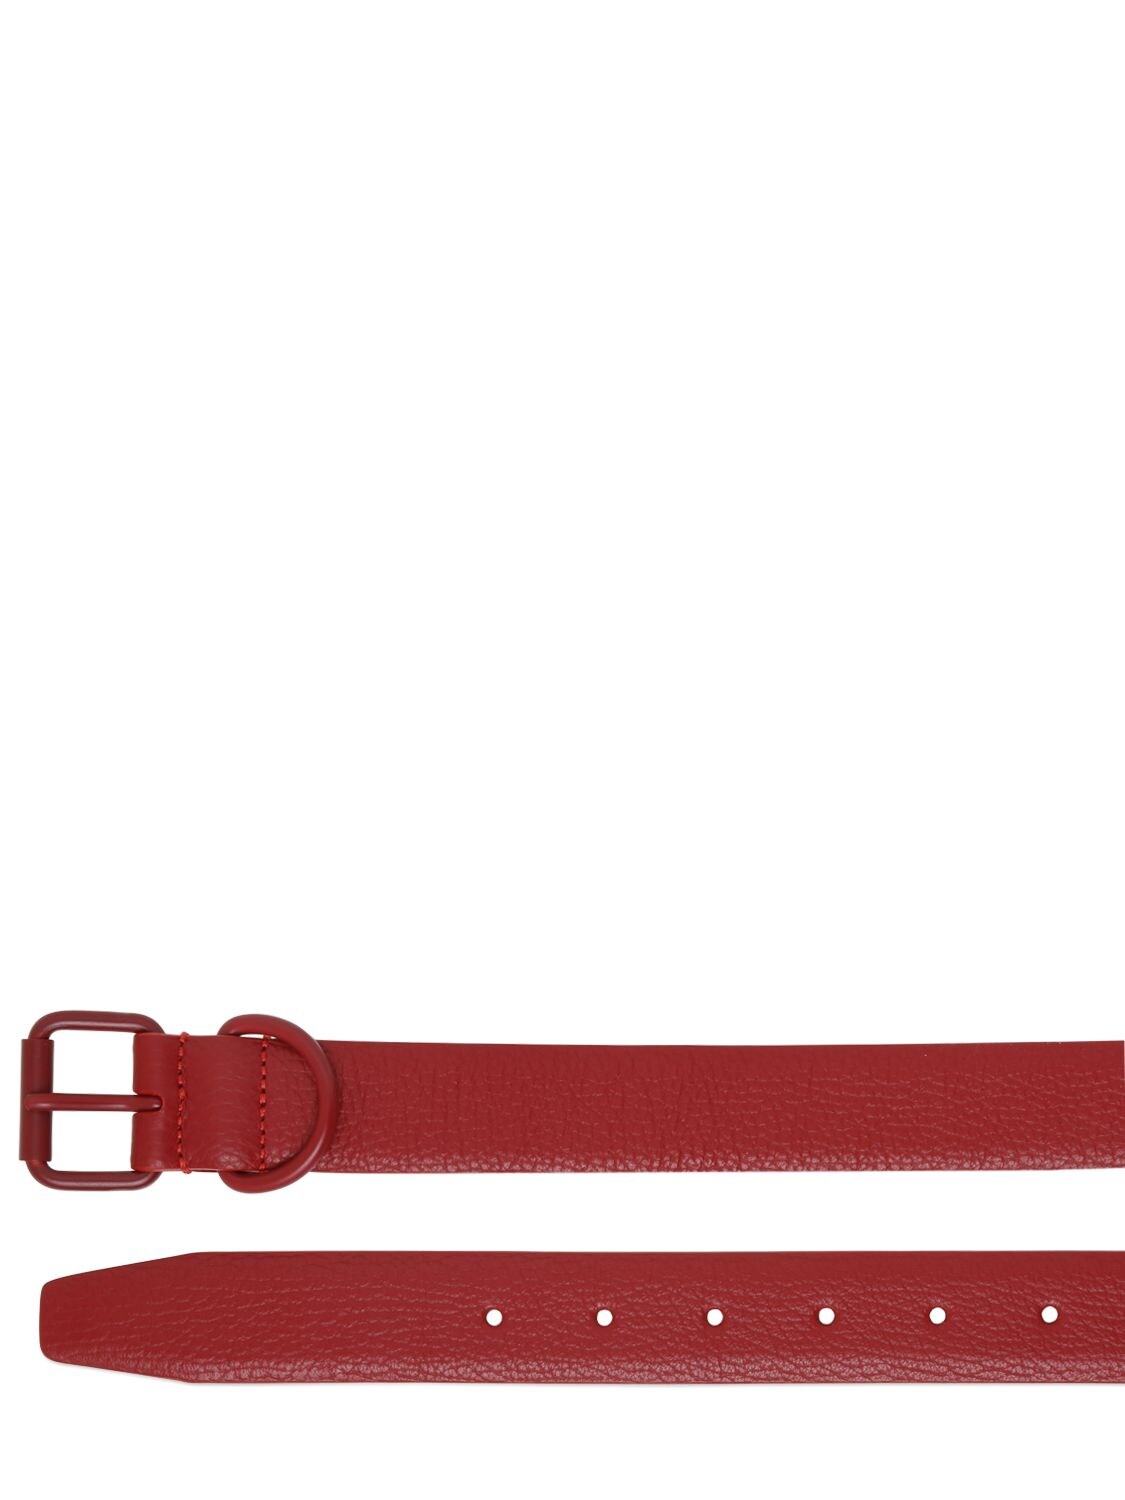 Fortu Milano 30mm Leather Belt In Red Pedregal